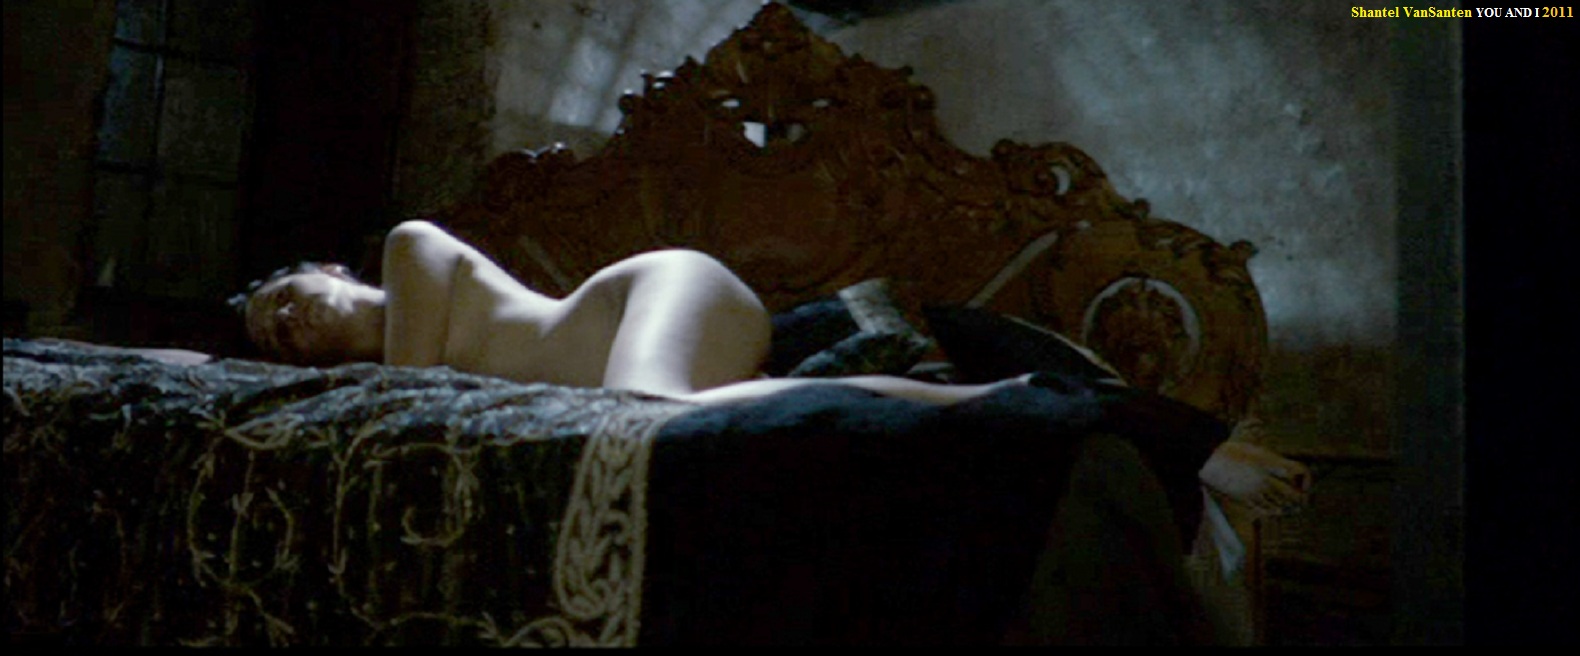 Шантель ВанСантен nude pics.